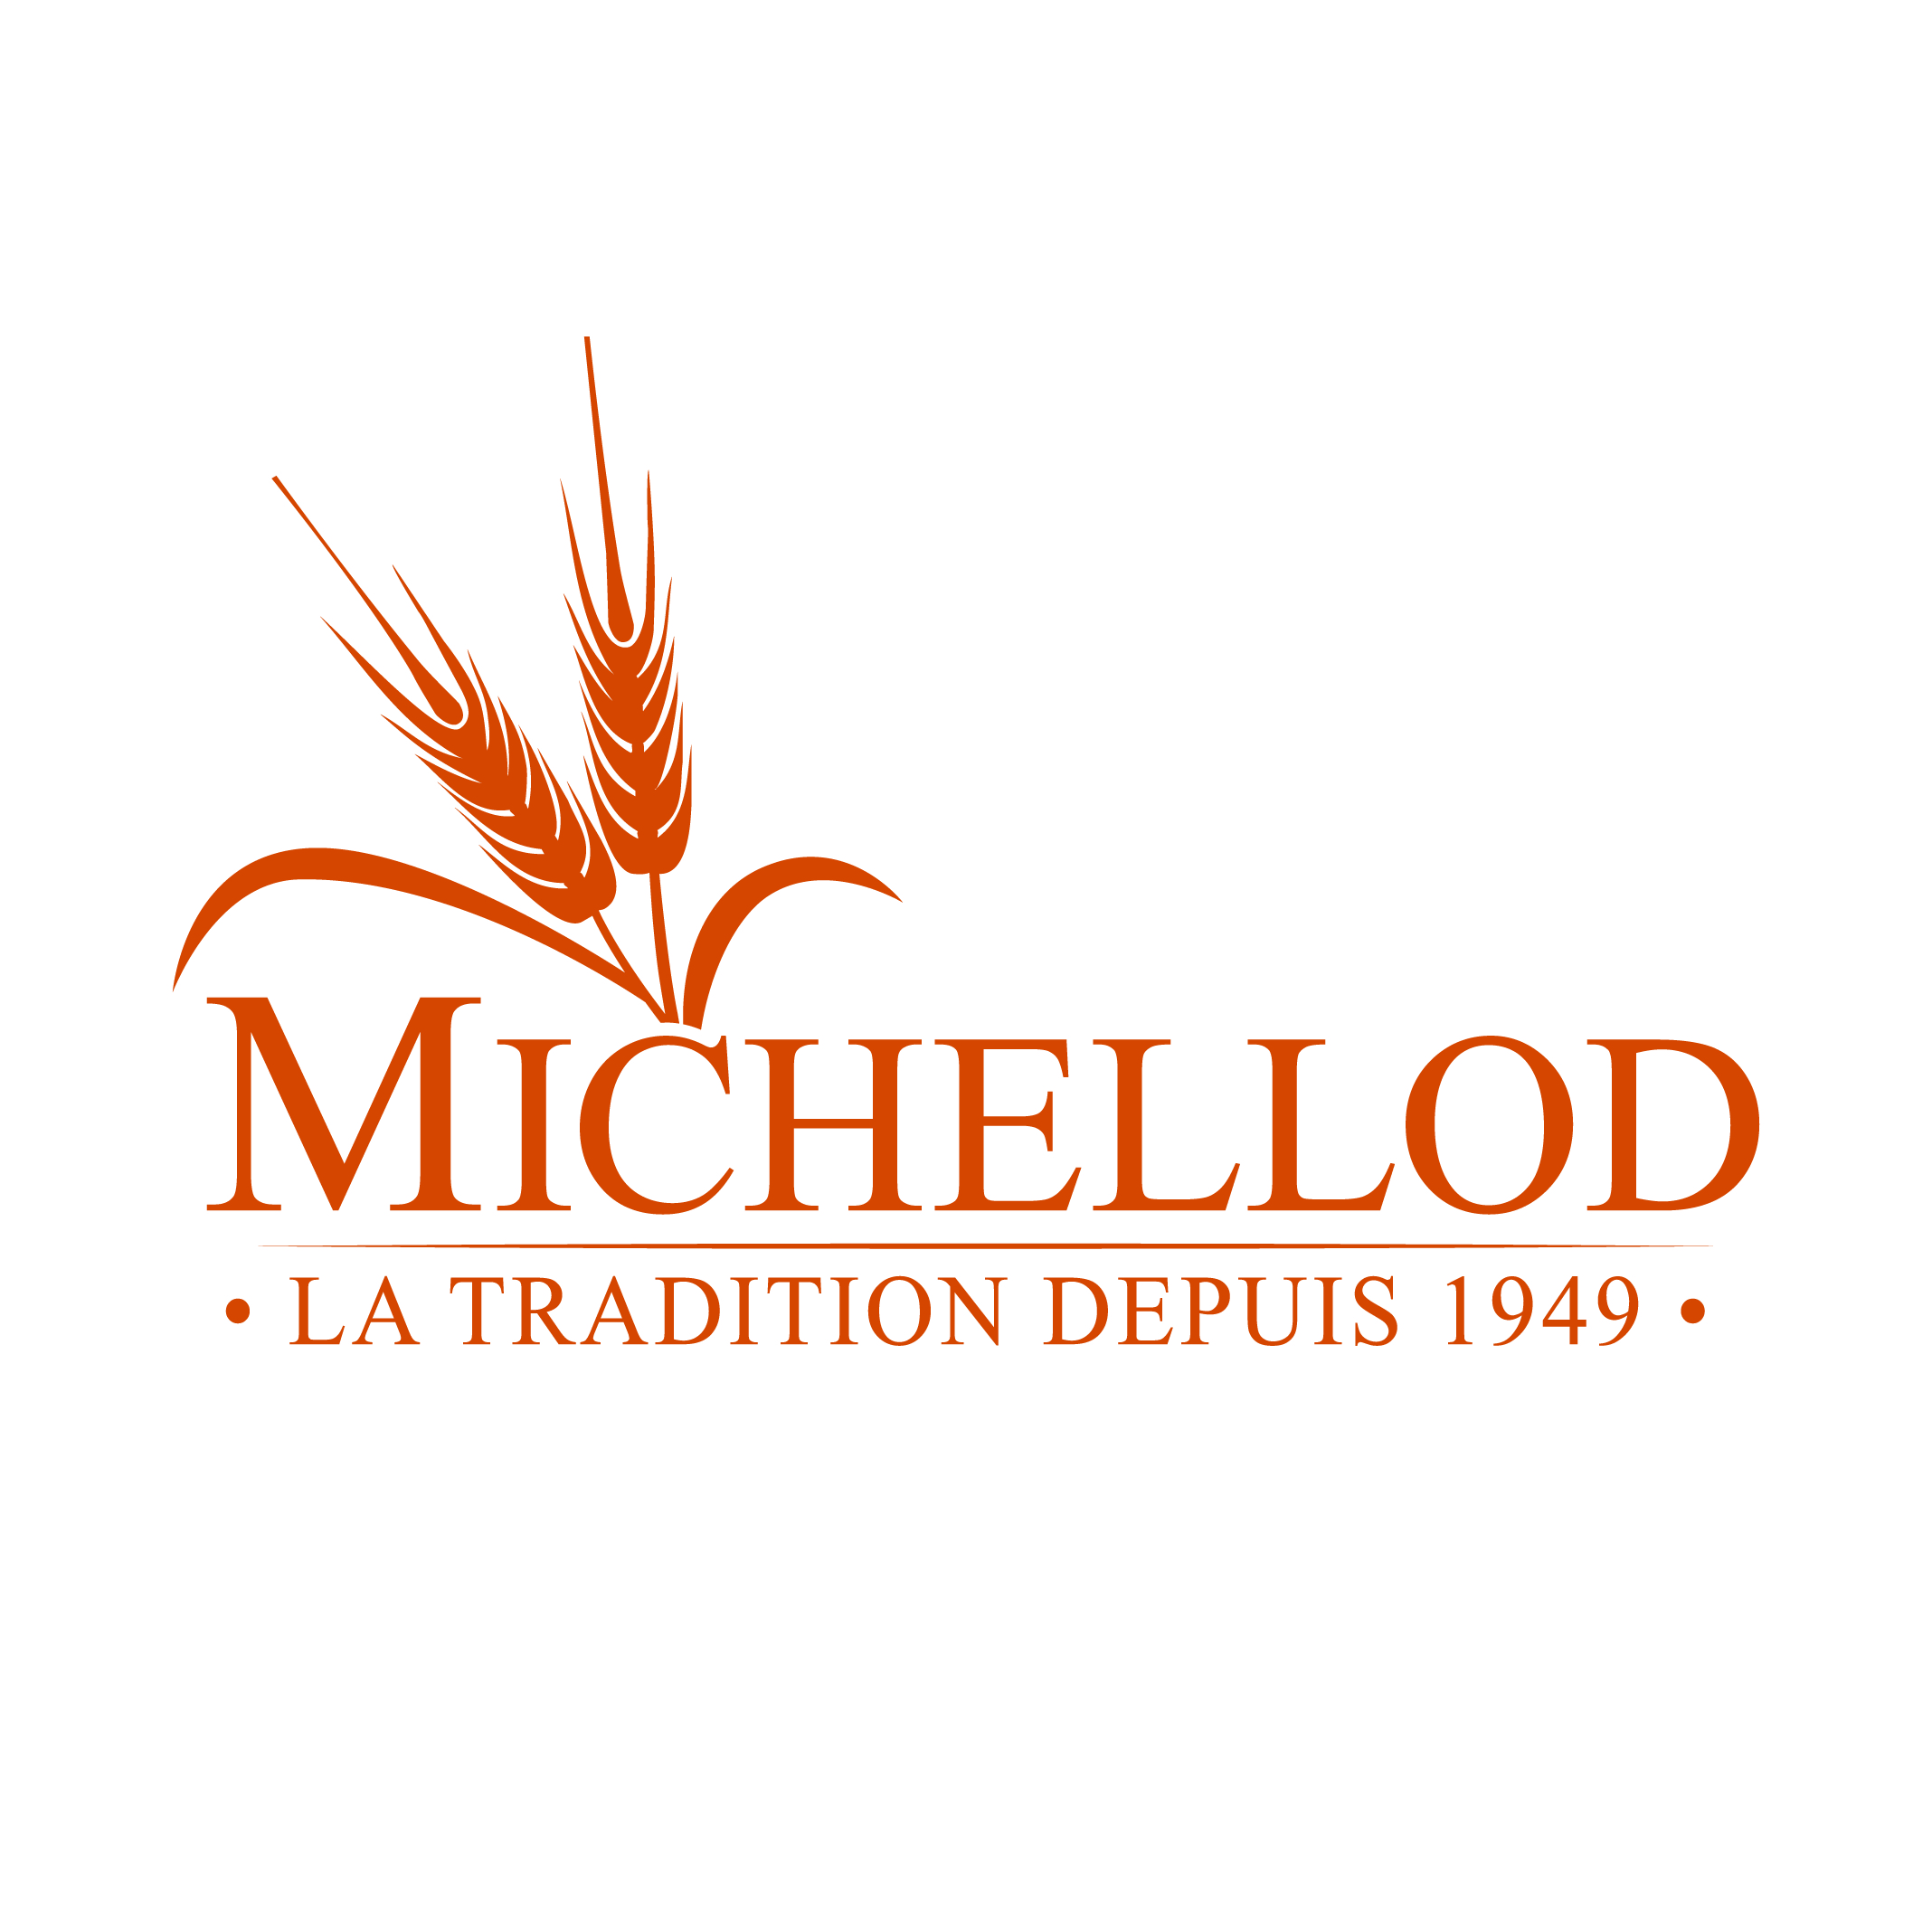 Boulangerie Michellod